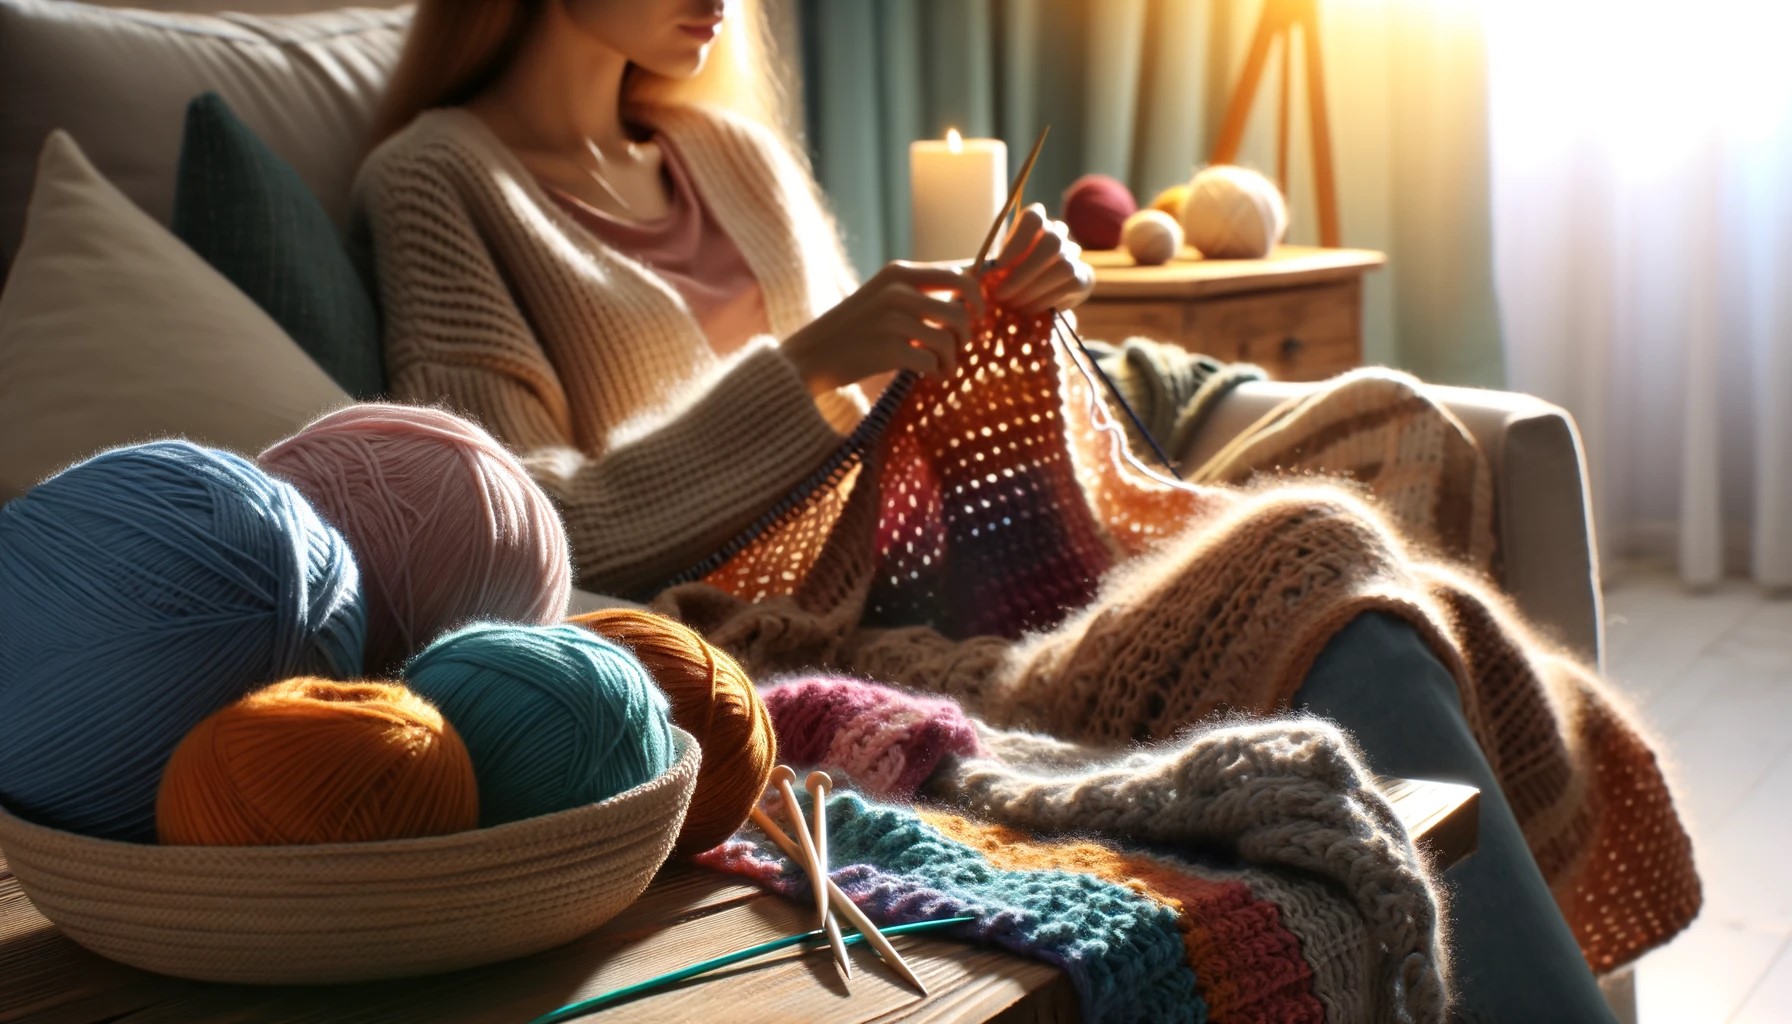 Knitting basics, DIY scarf knitting, homemade blanket, knitting project, yarn crafts, beginner knitting, knit patterns, crafting, hand-knit scarf, knit blanket, creative hobbies, textile art